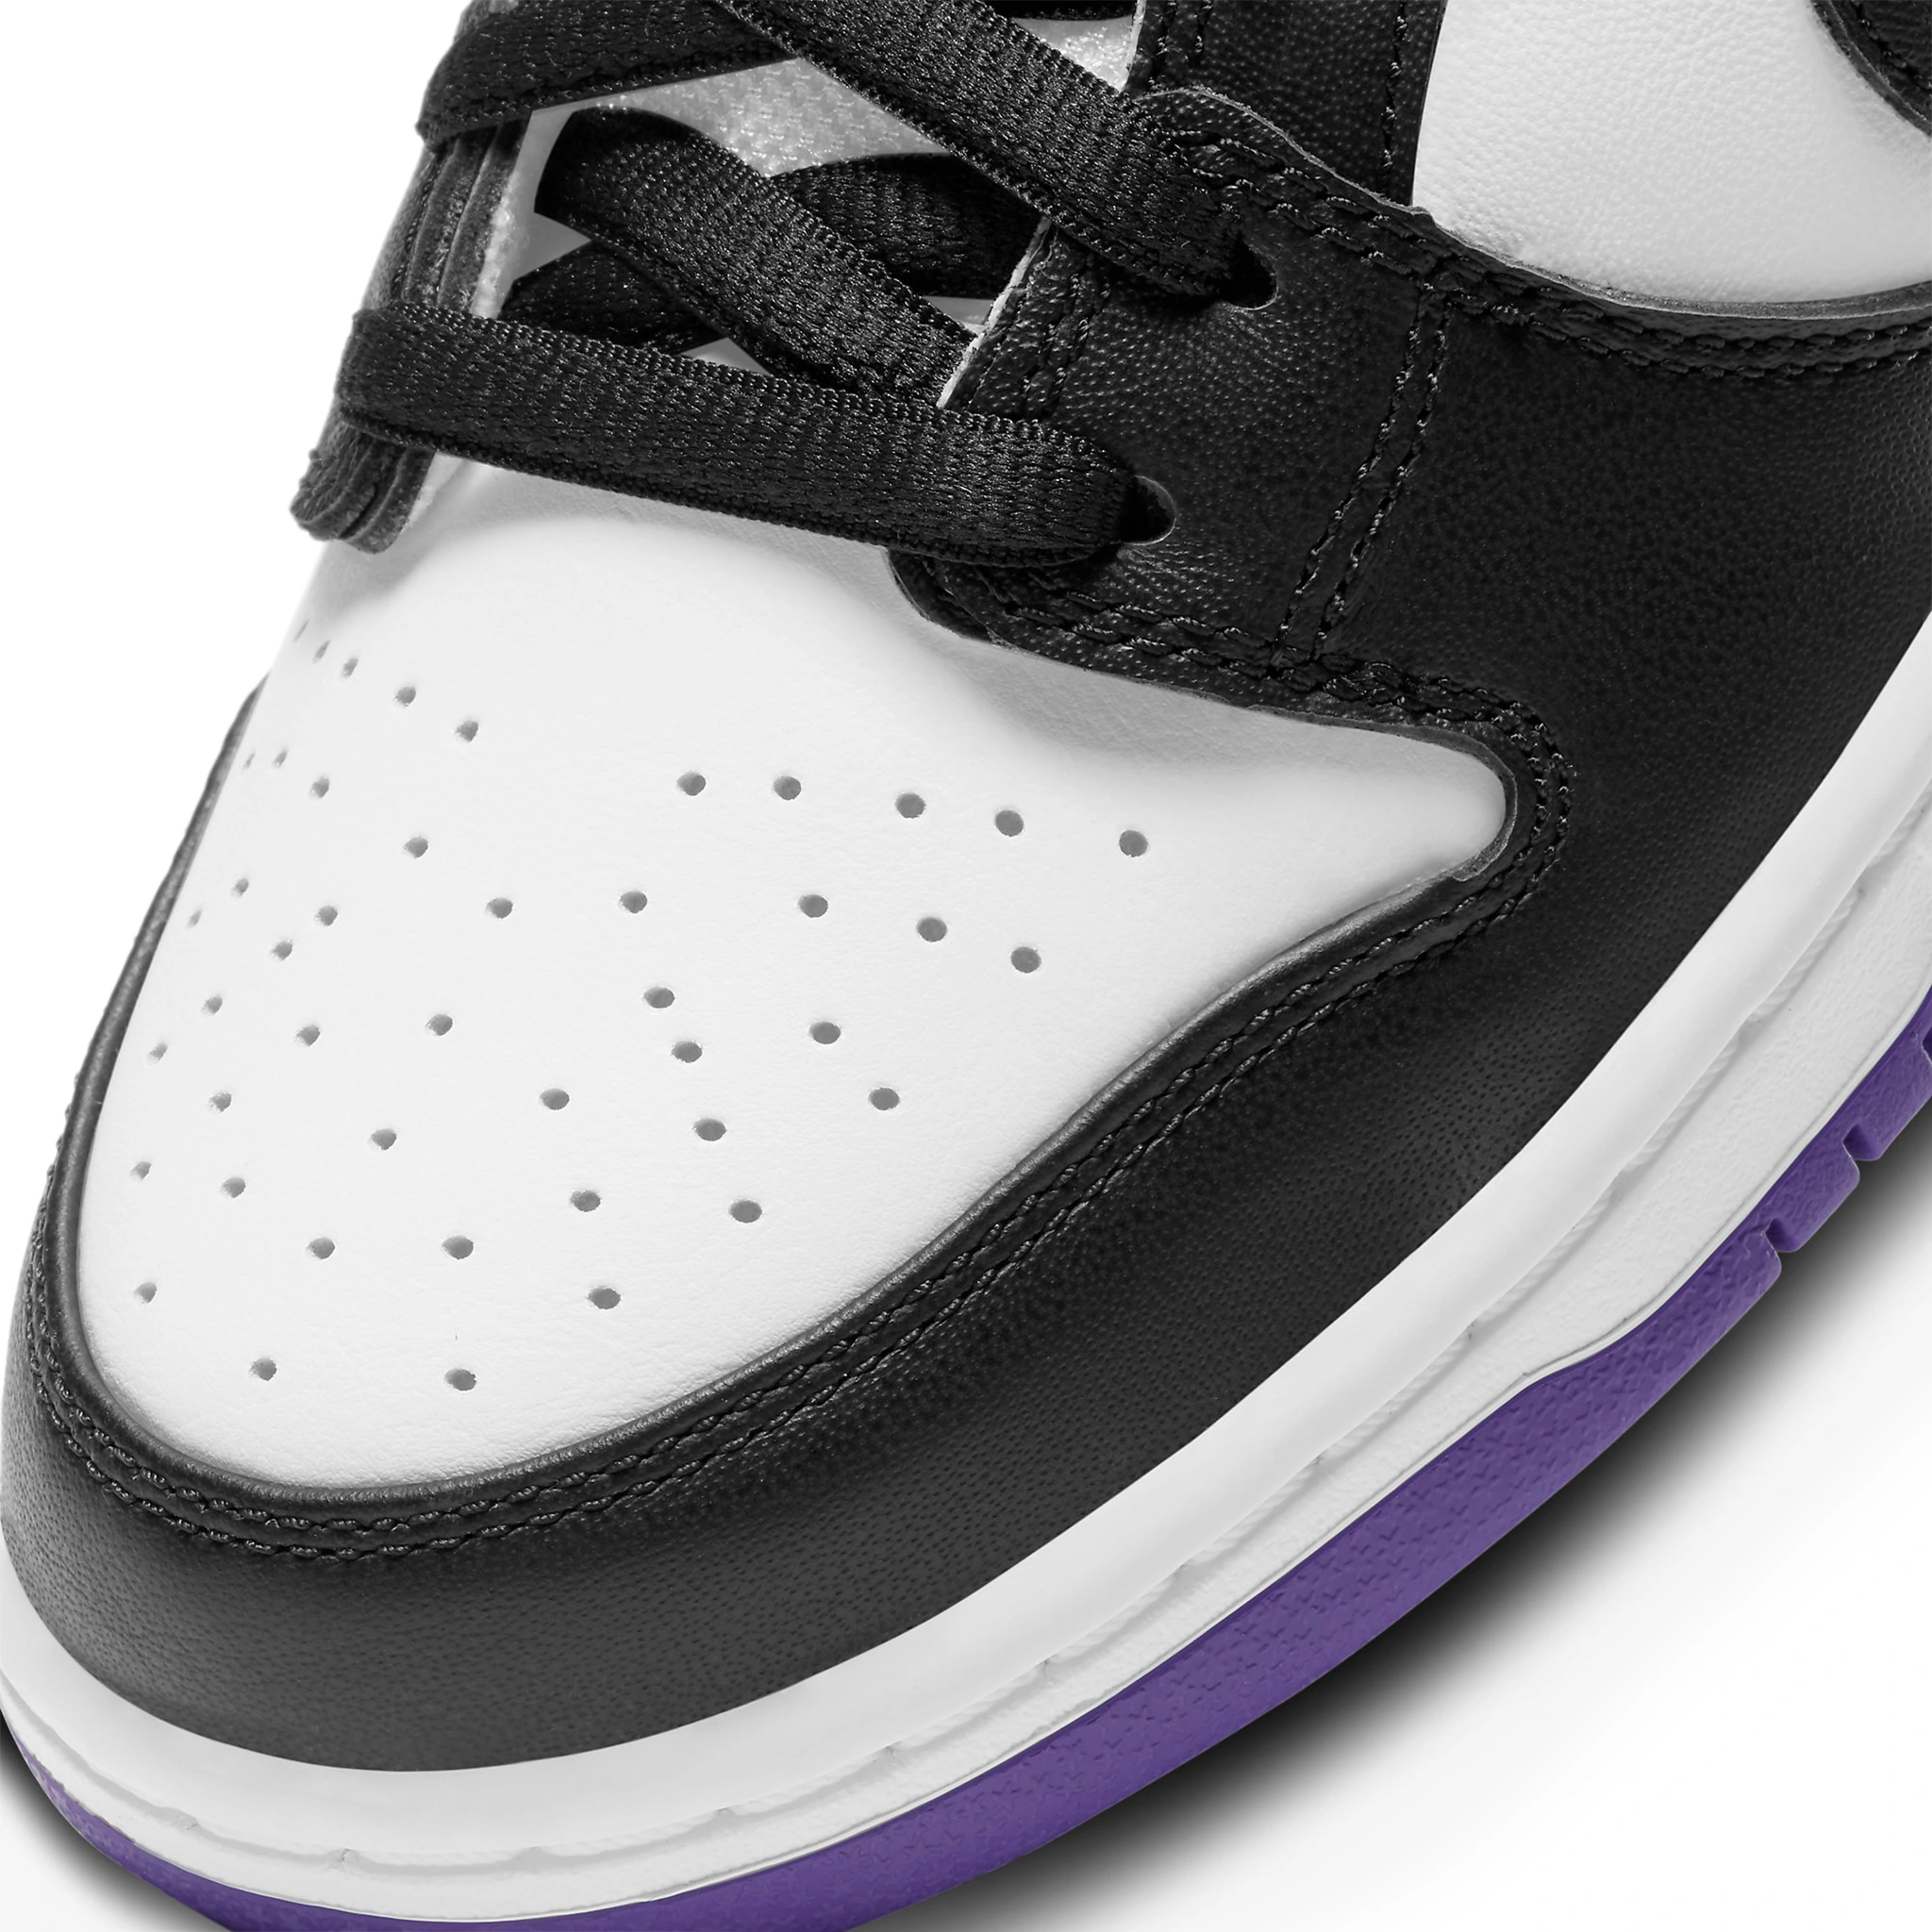 Toe box view of Nike SB Dunk Low Court Purple BQ6817-500